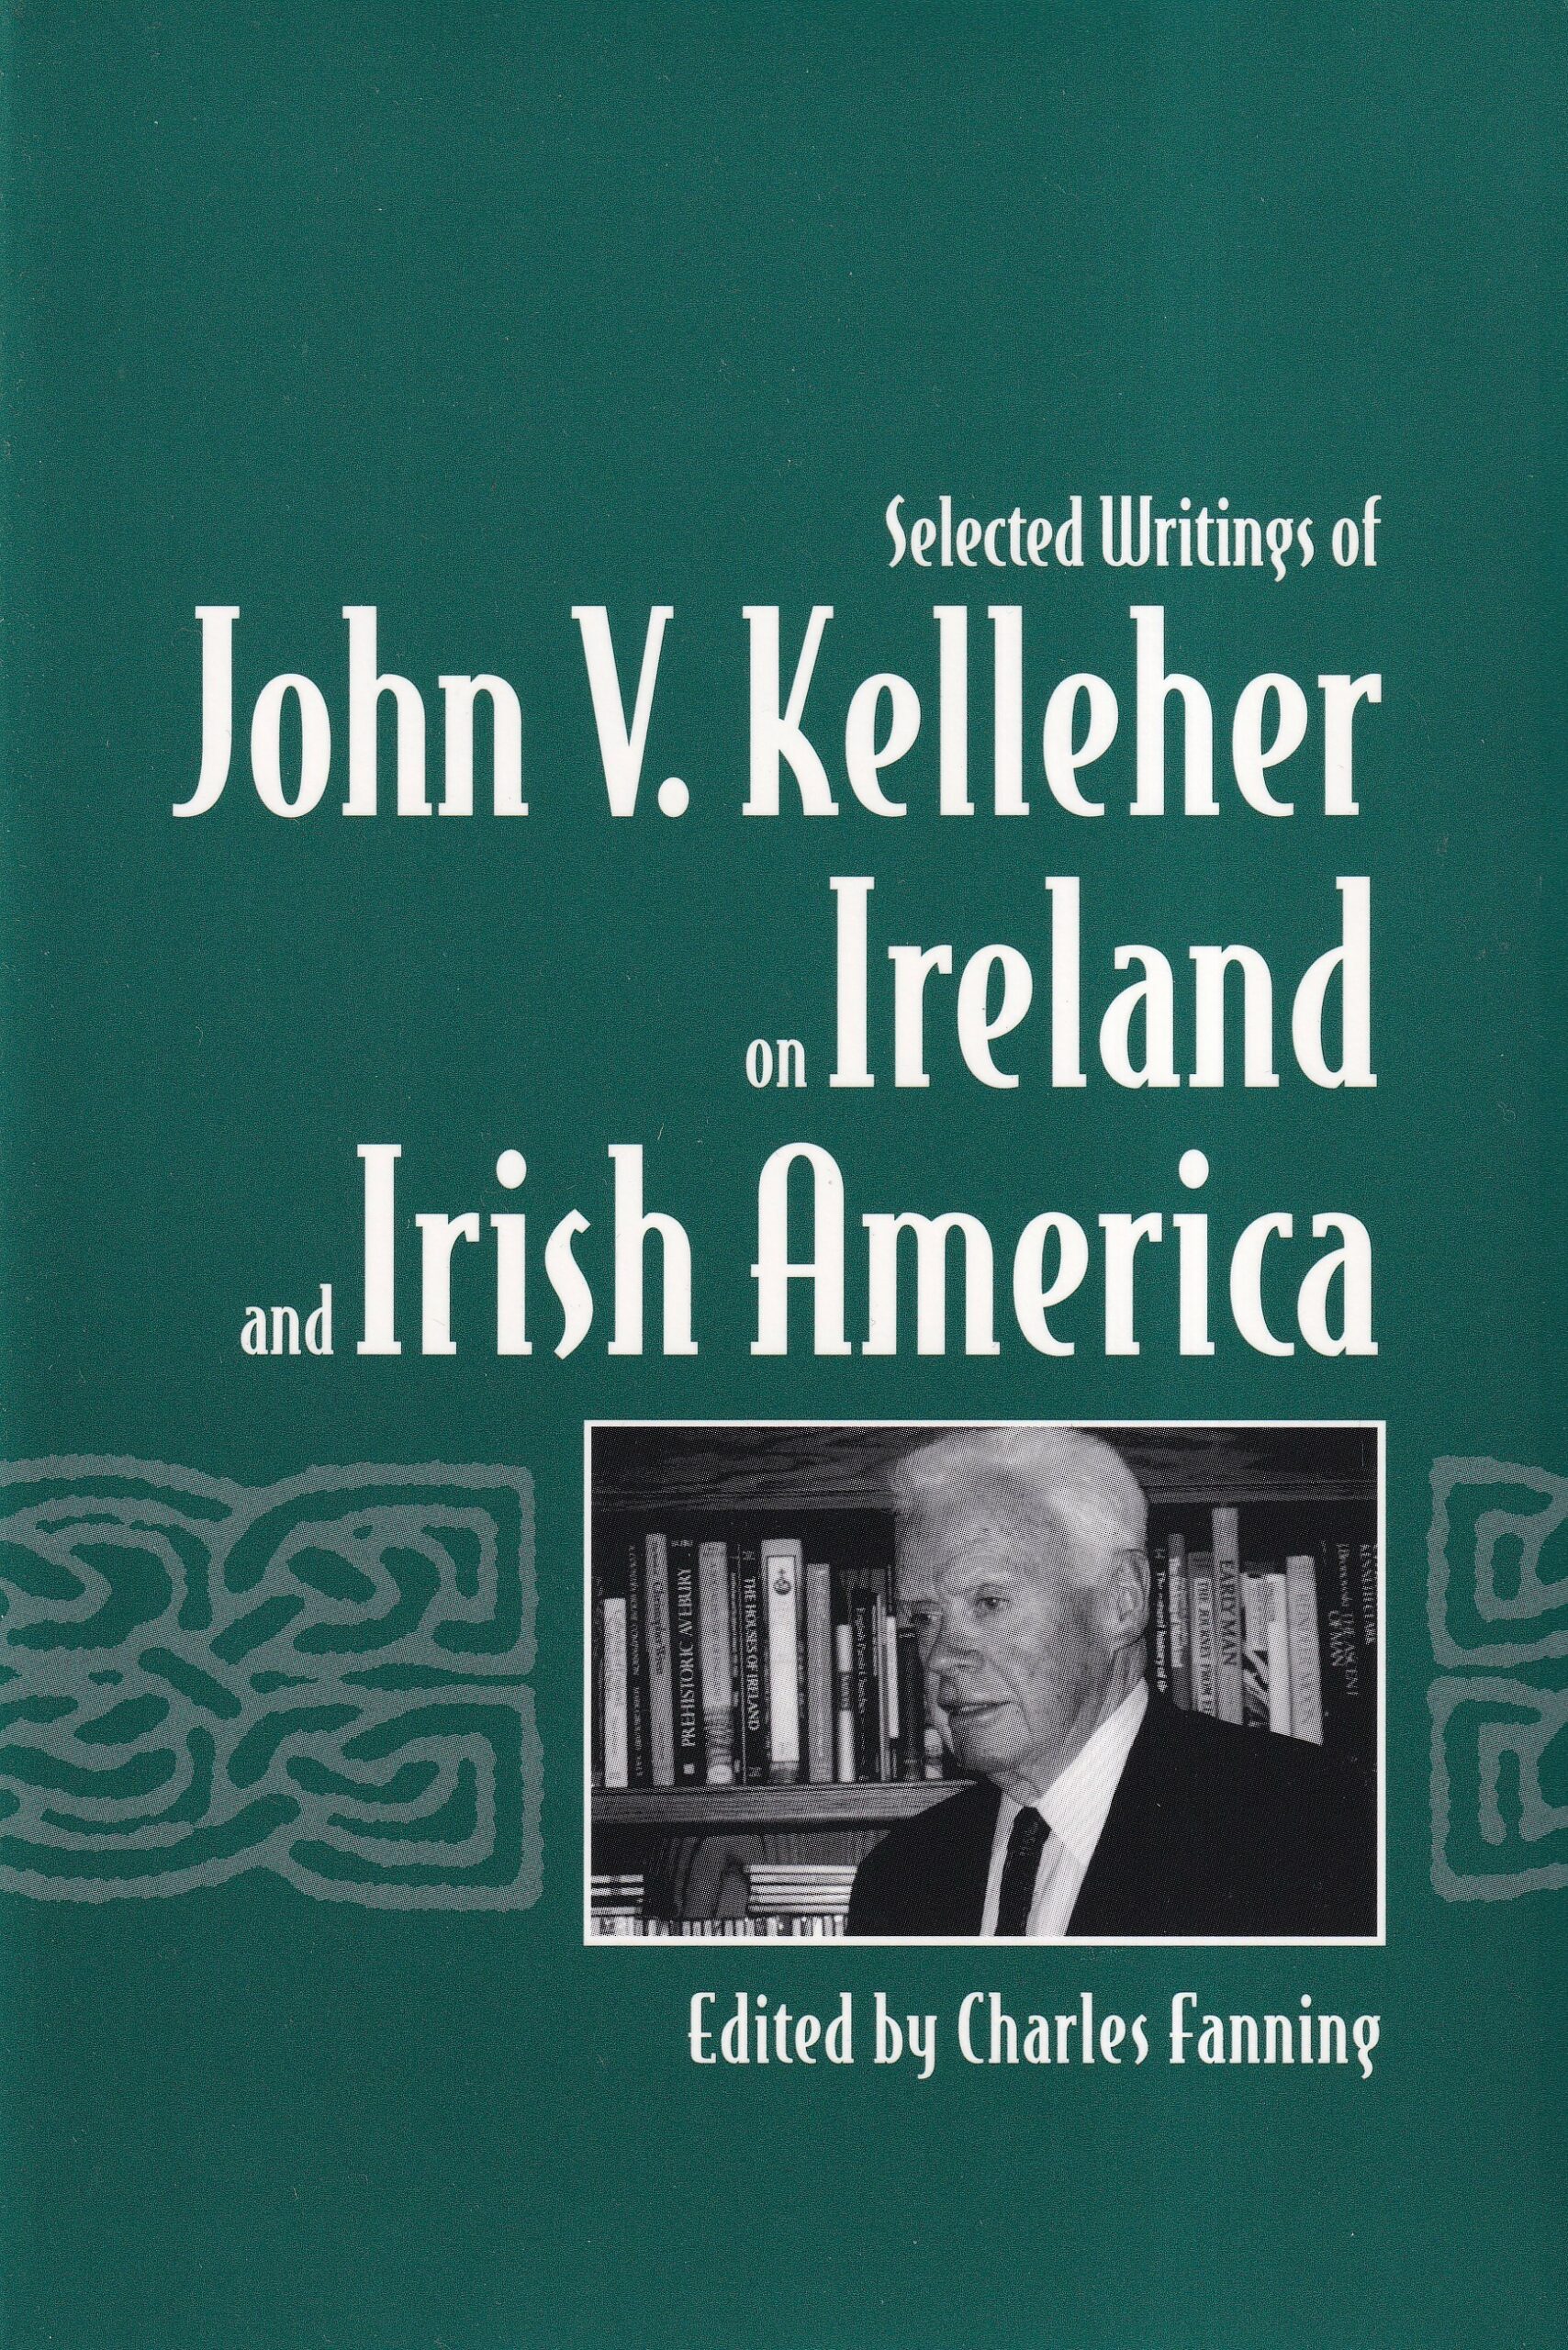 Selected Writings of John V. Kelleher on Ireland and Irish America by Charles Fanning (ed.)